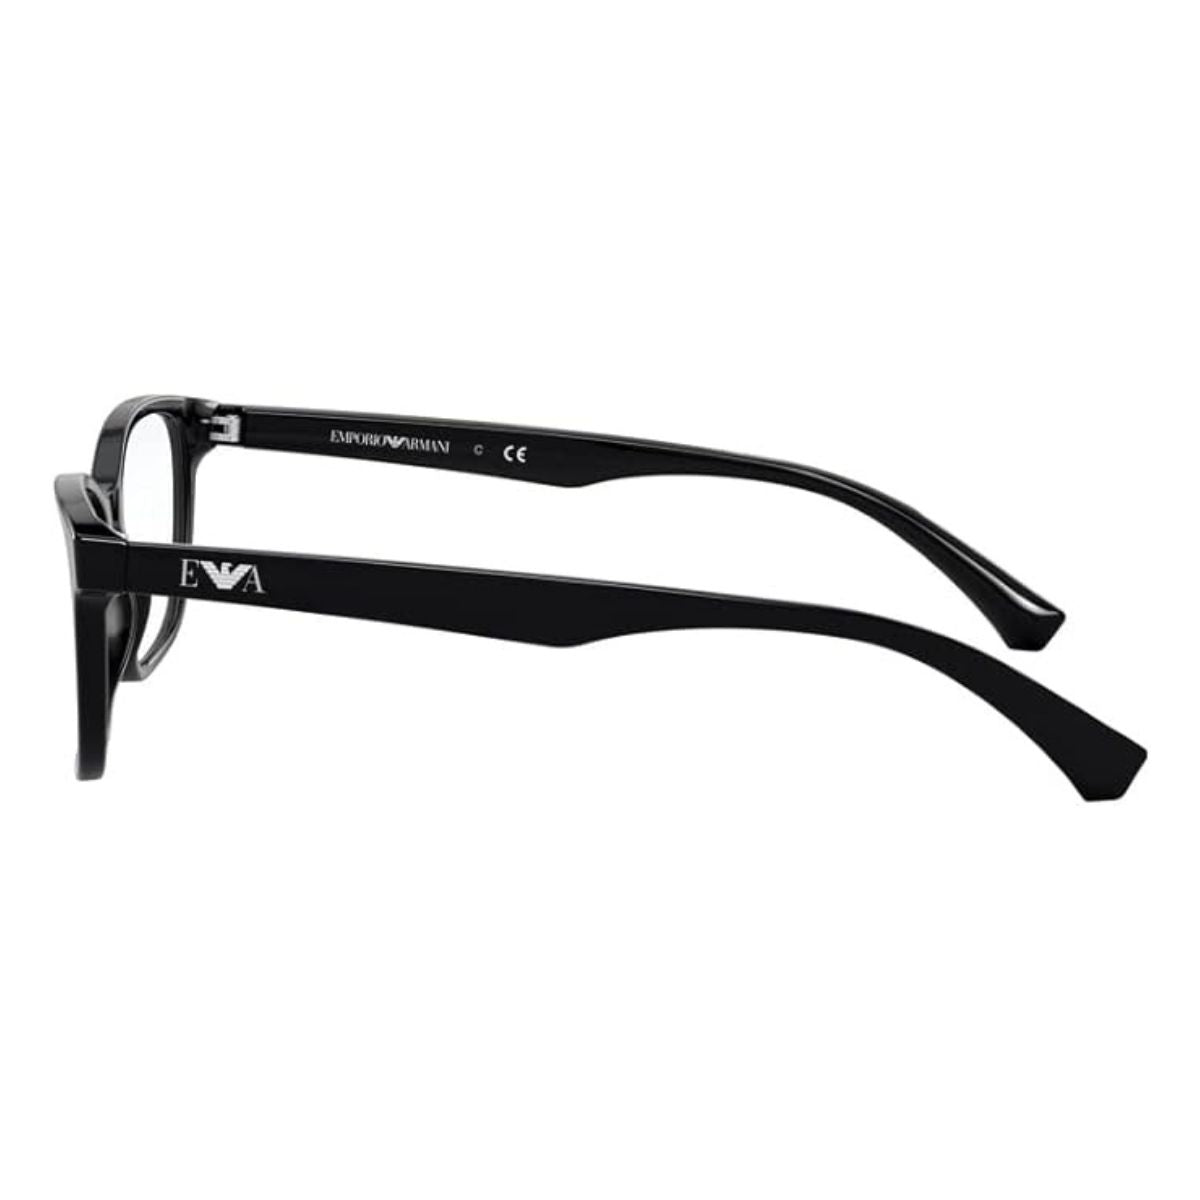 "best Emporio Armani 3157 5001 black color eyeglasses frame for women's at optorium"